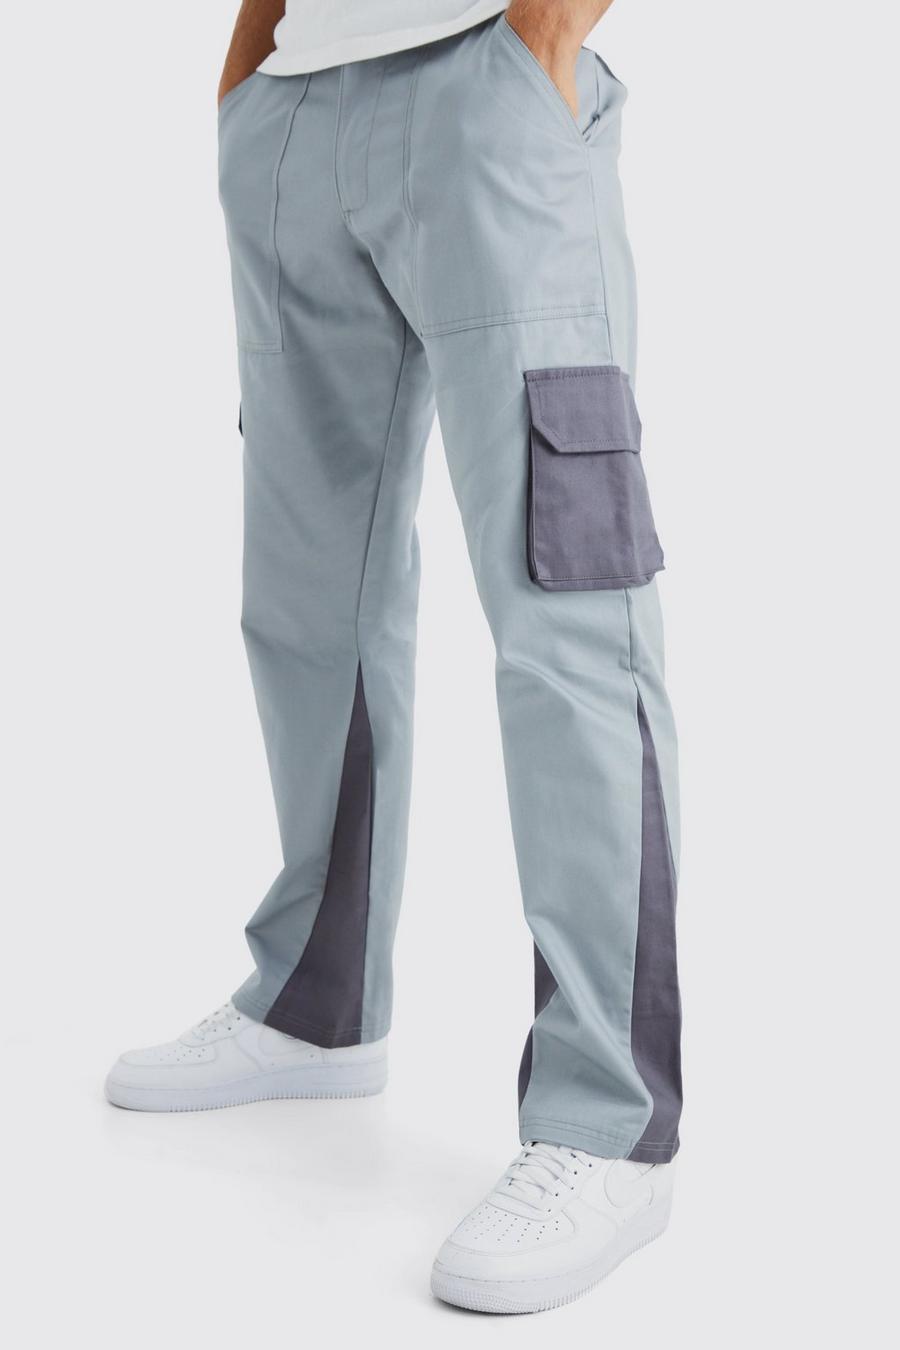 Slate Tall Slim Flare Gusset Color Block Cargo Pants